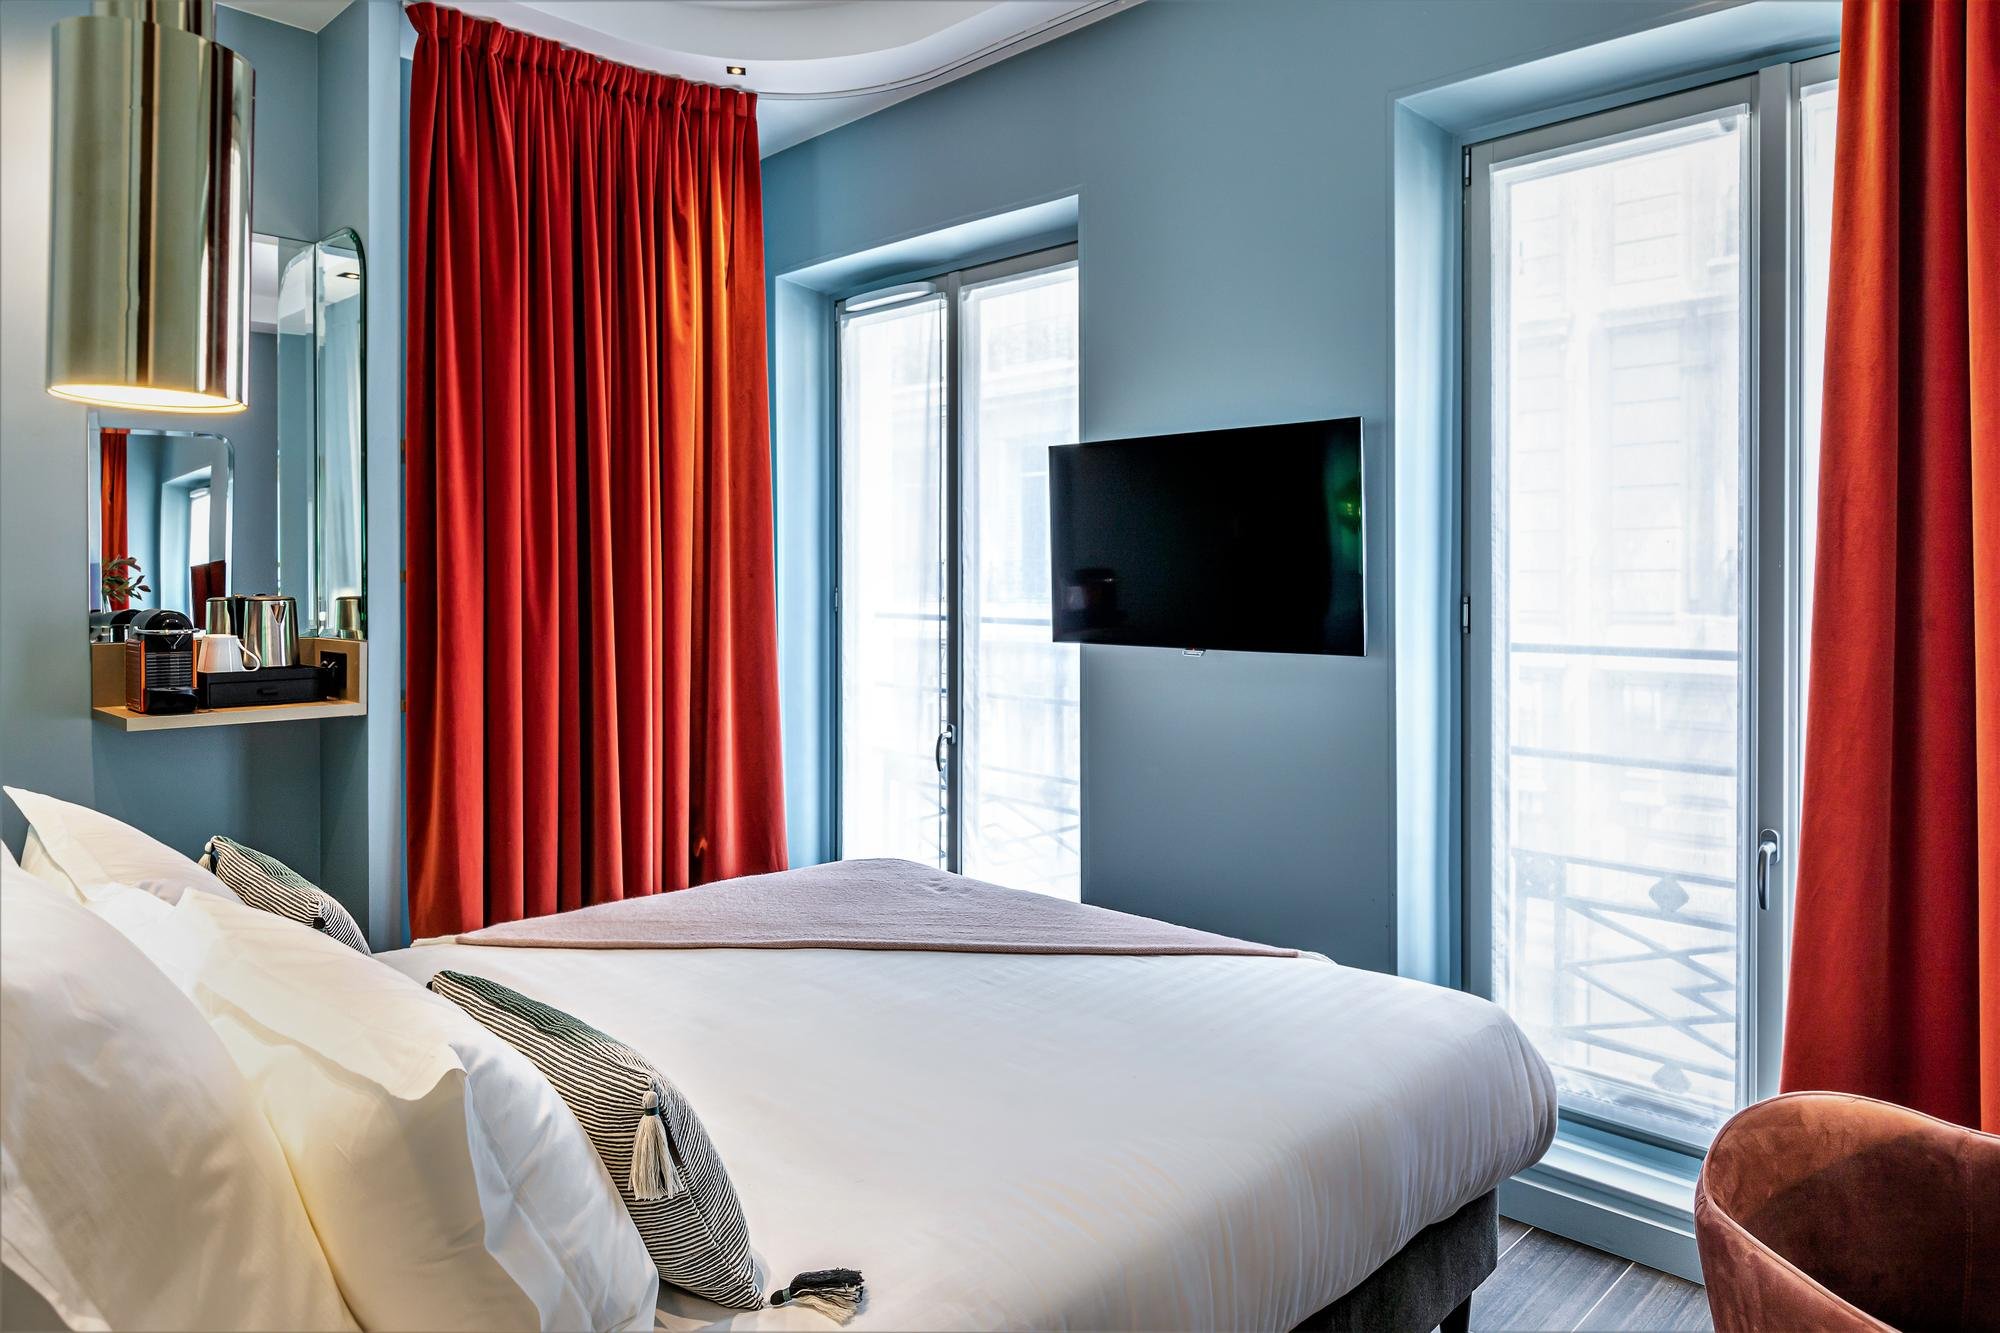 Hôtel Veryste - Verydouce Room - Bed and TV